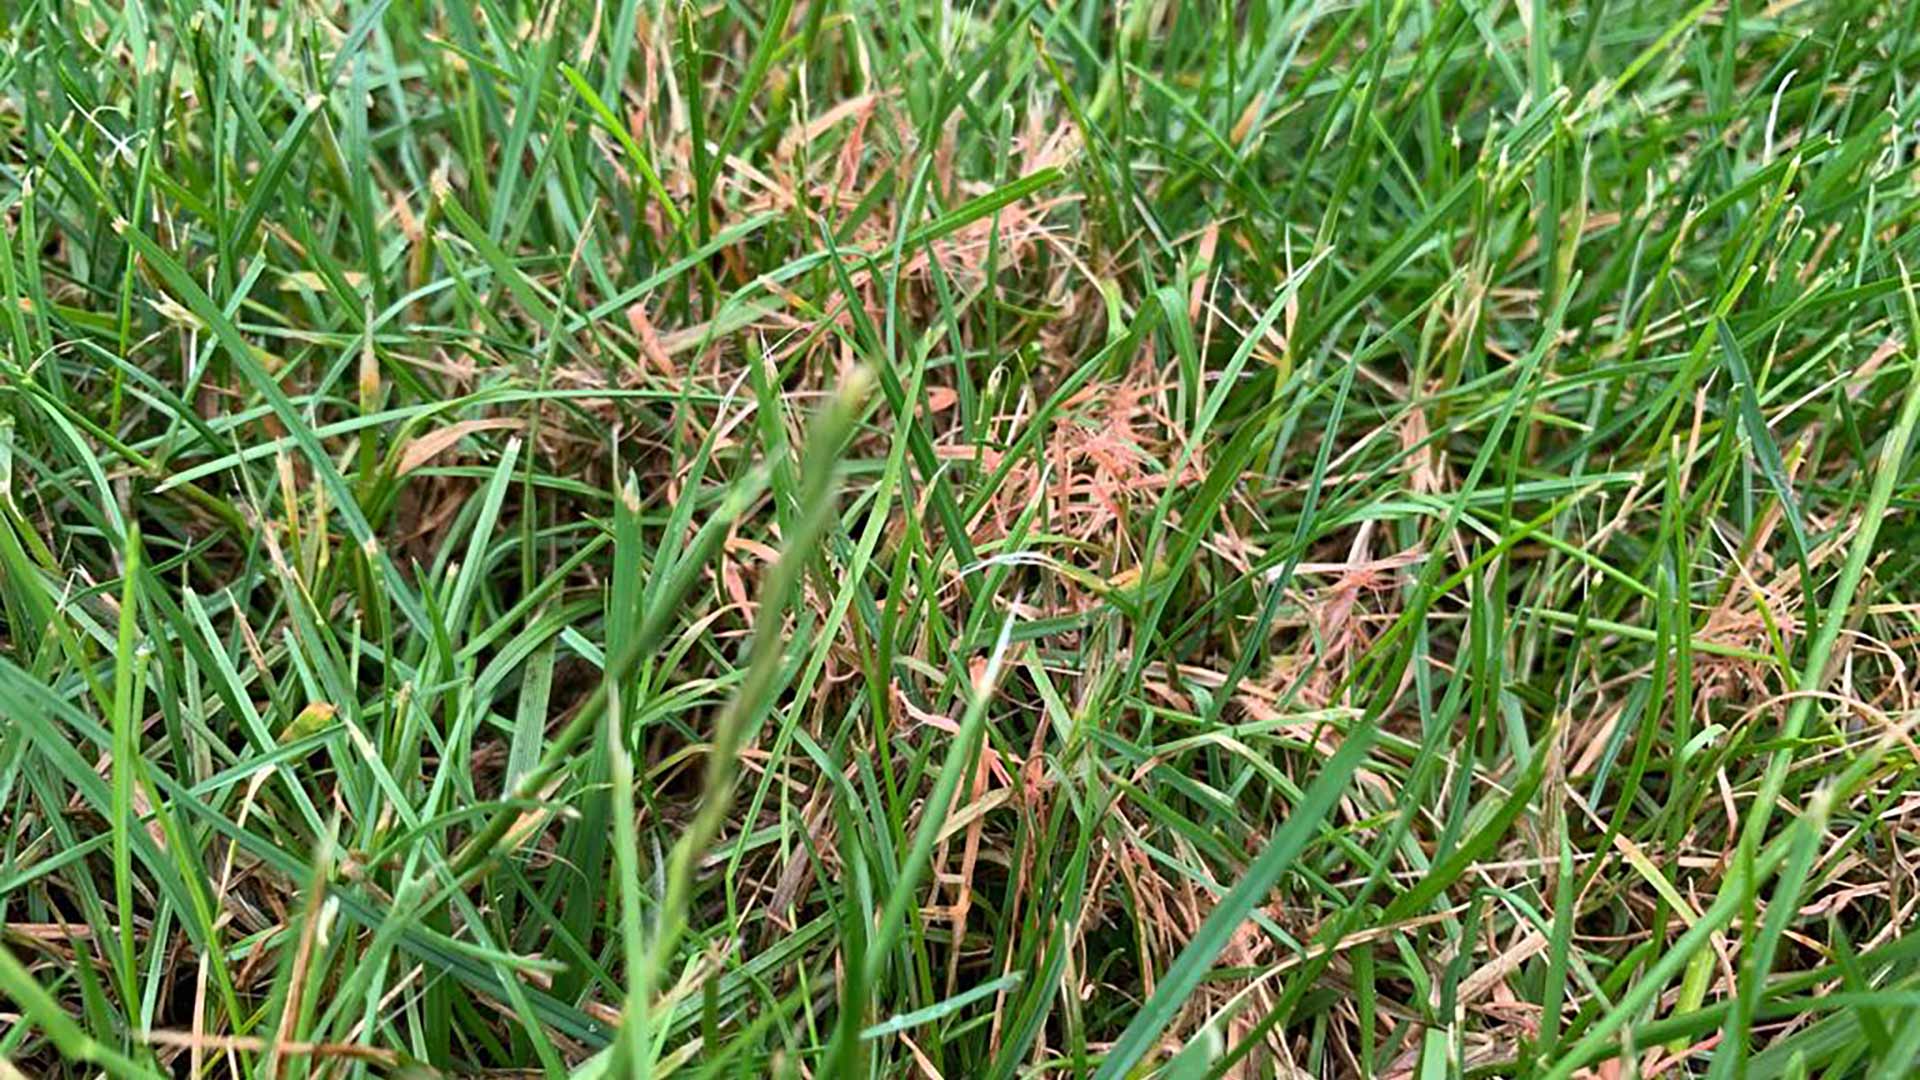 Red thread lawn disease in lawn in Mason, OH.